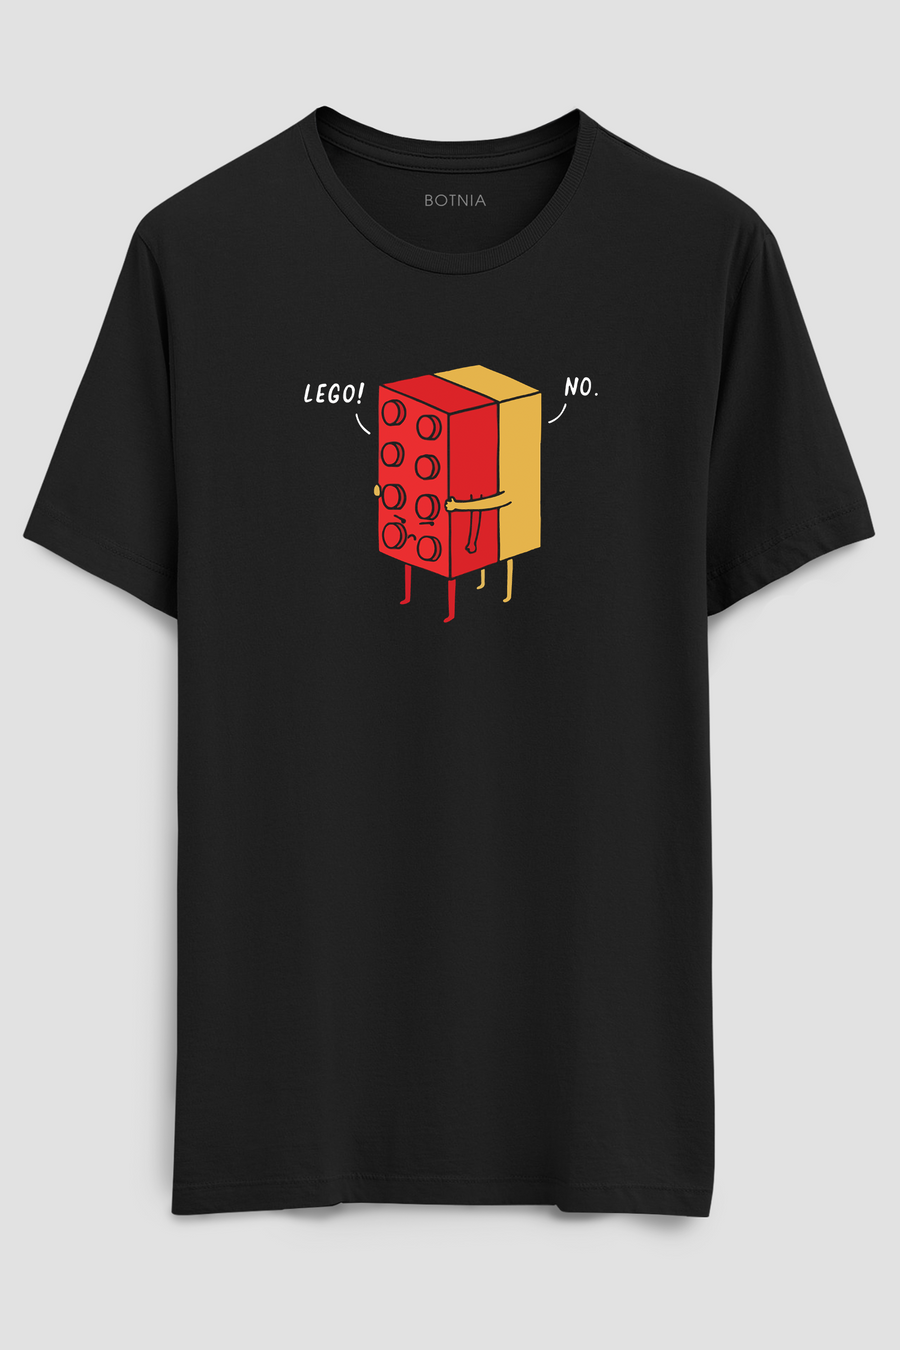 Lego-No : Half sleeve t-shirt - Botnia